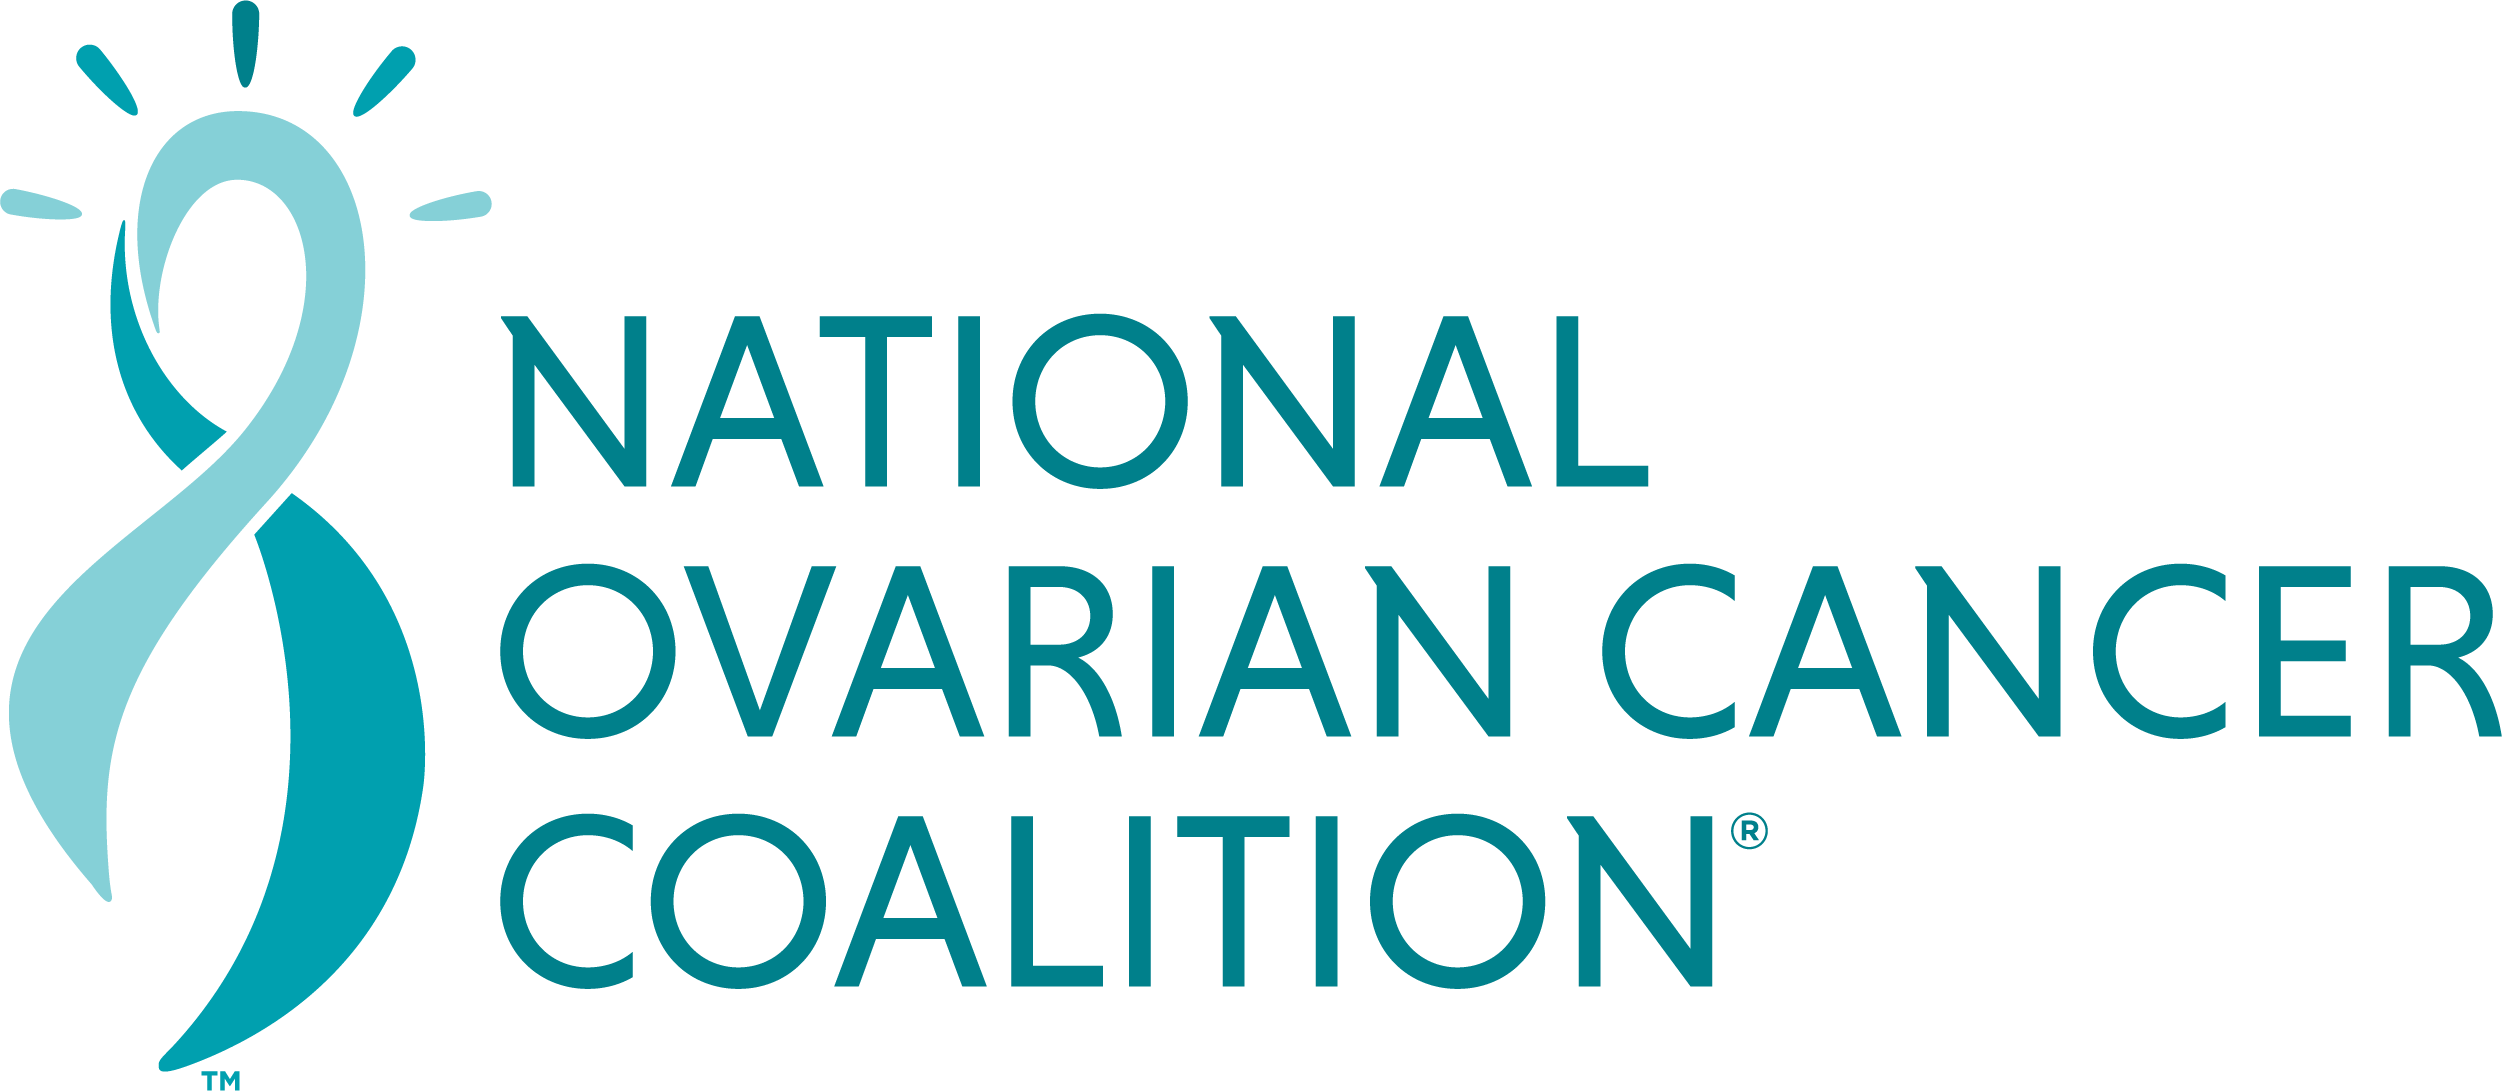 The National Ovarian Cancer Coalition (NOCC) Logo